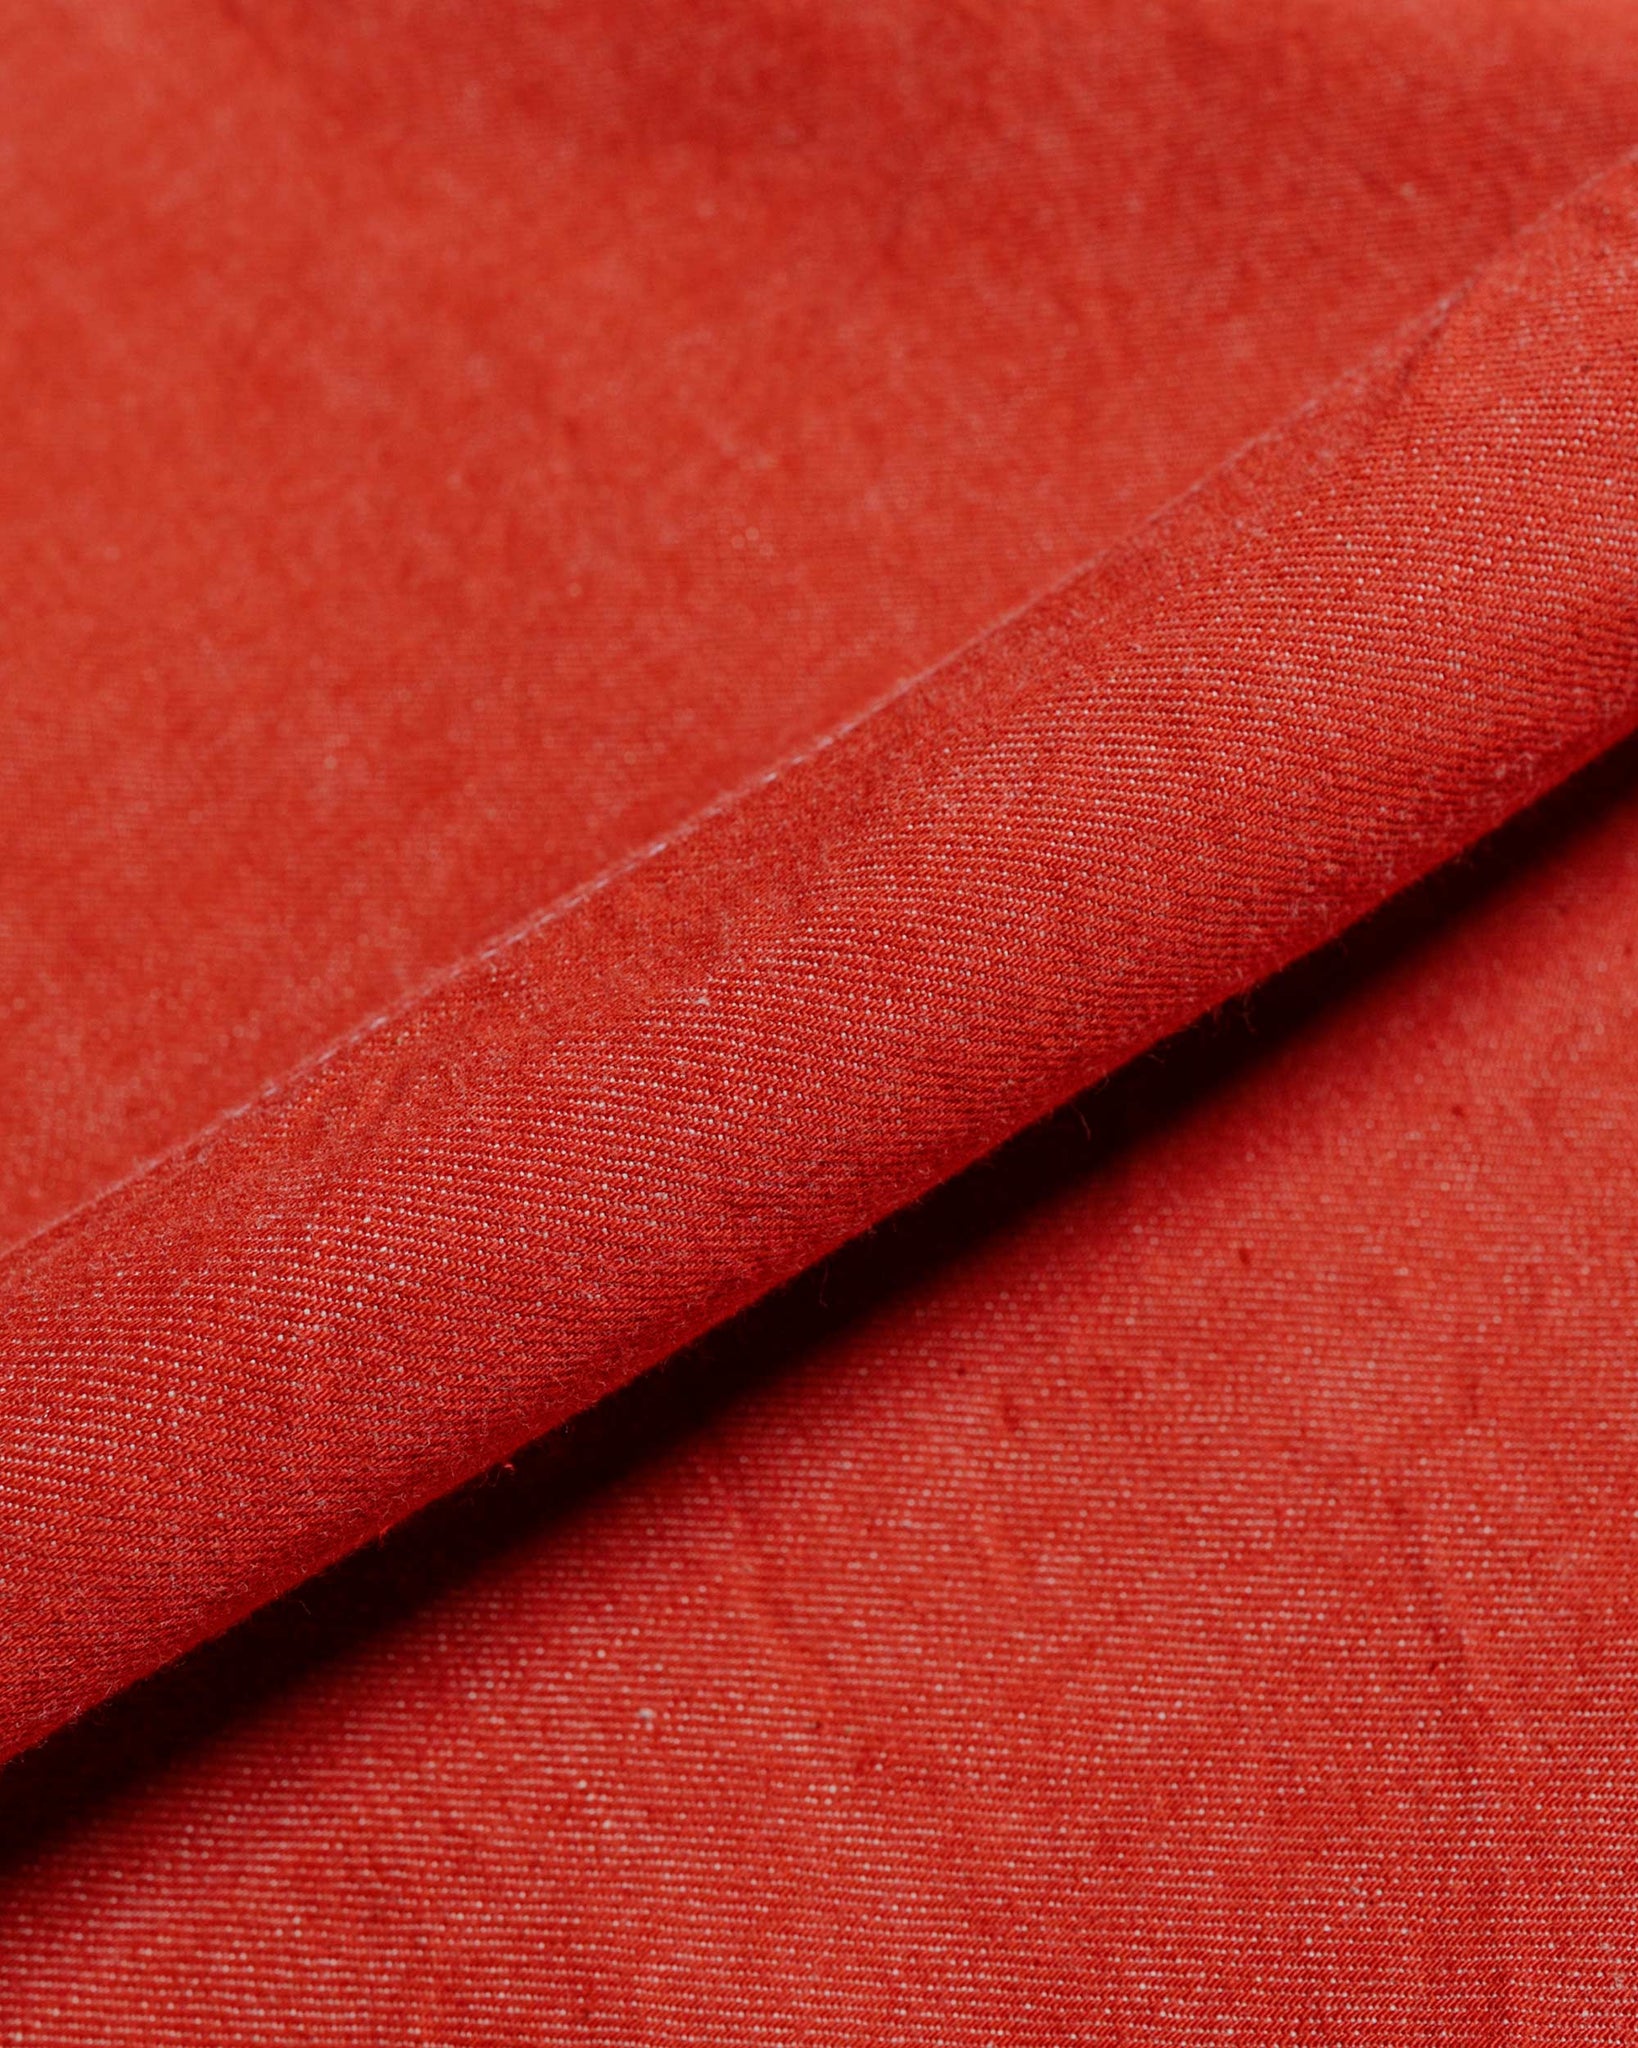 Randy's Garments 7-Pocket Jean 13.75oz Laundered Uncut Selvedge Denim Red fabric